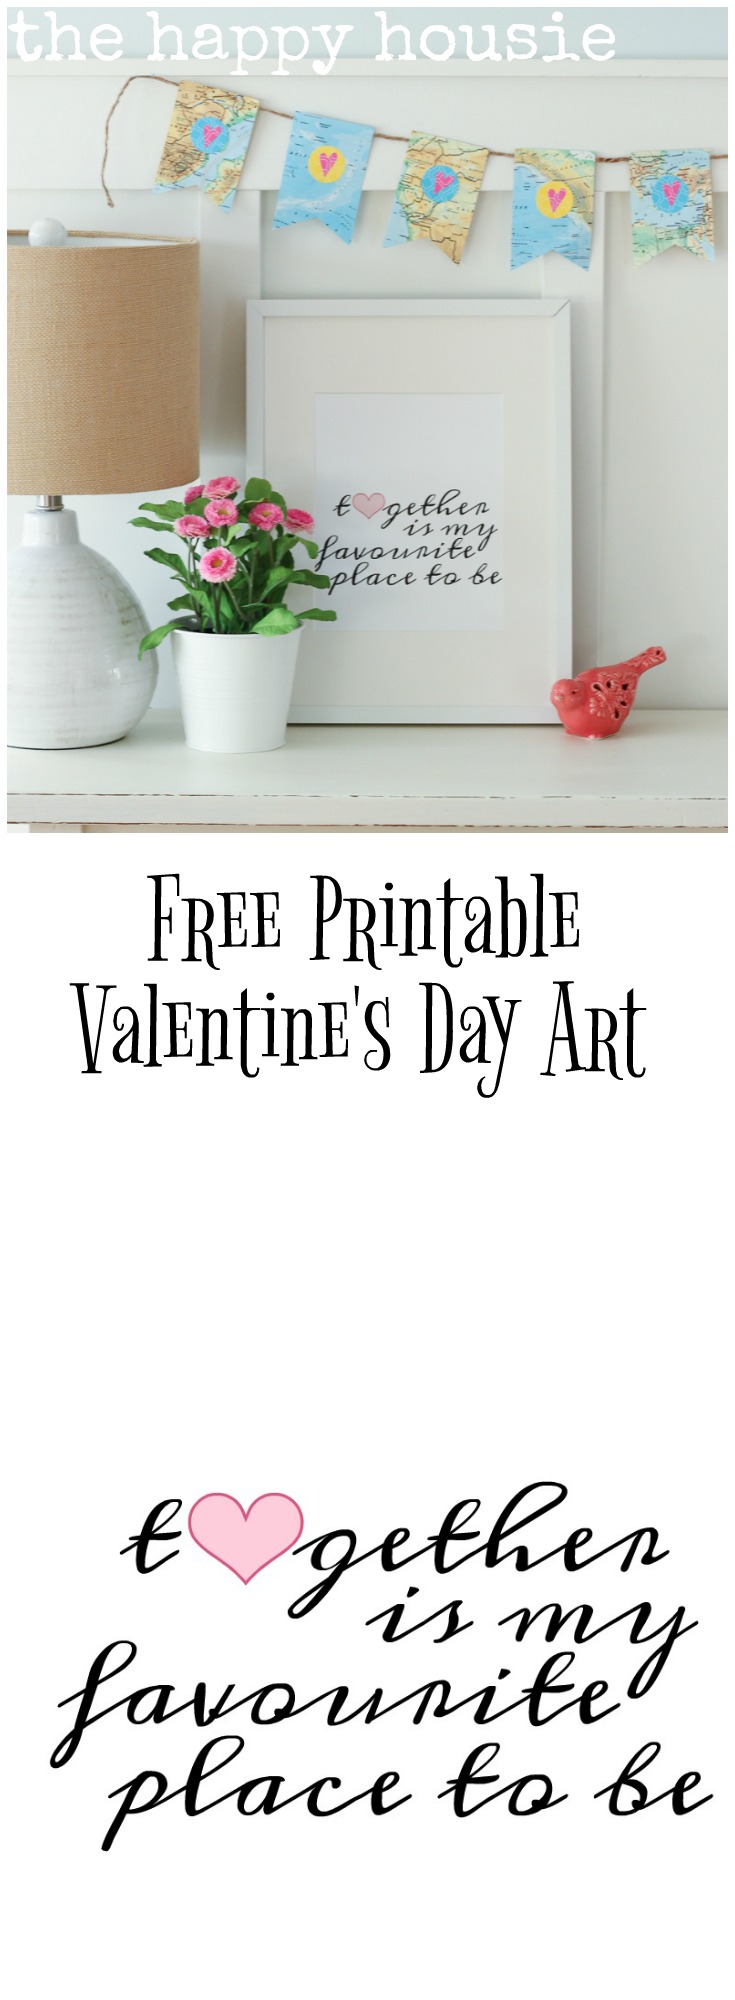 Free Printable Valentine's Day Art graphic.